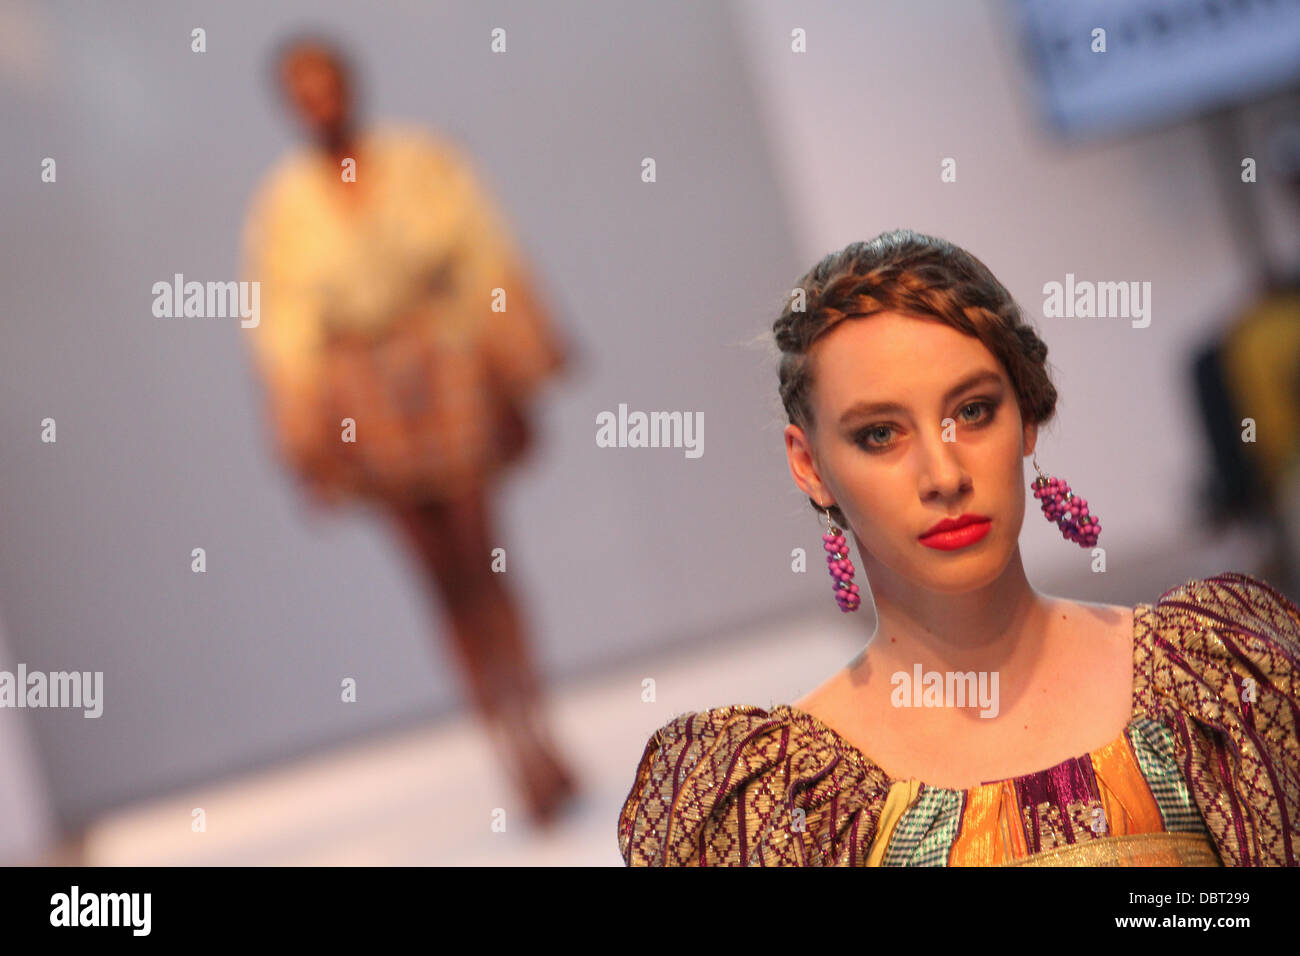 AFWL 13 Sabato 18.30 Sfilata di moda dotate di aracnide creazioni. David credito Mbiyu/Alamy Live News Foto Stock